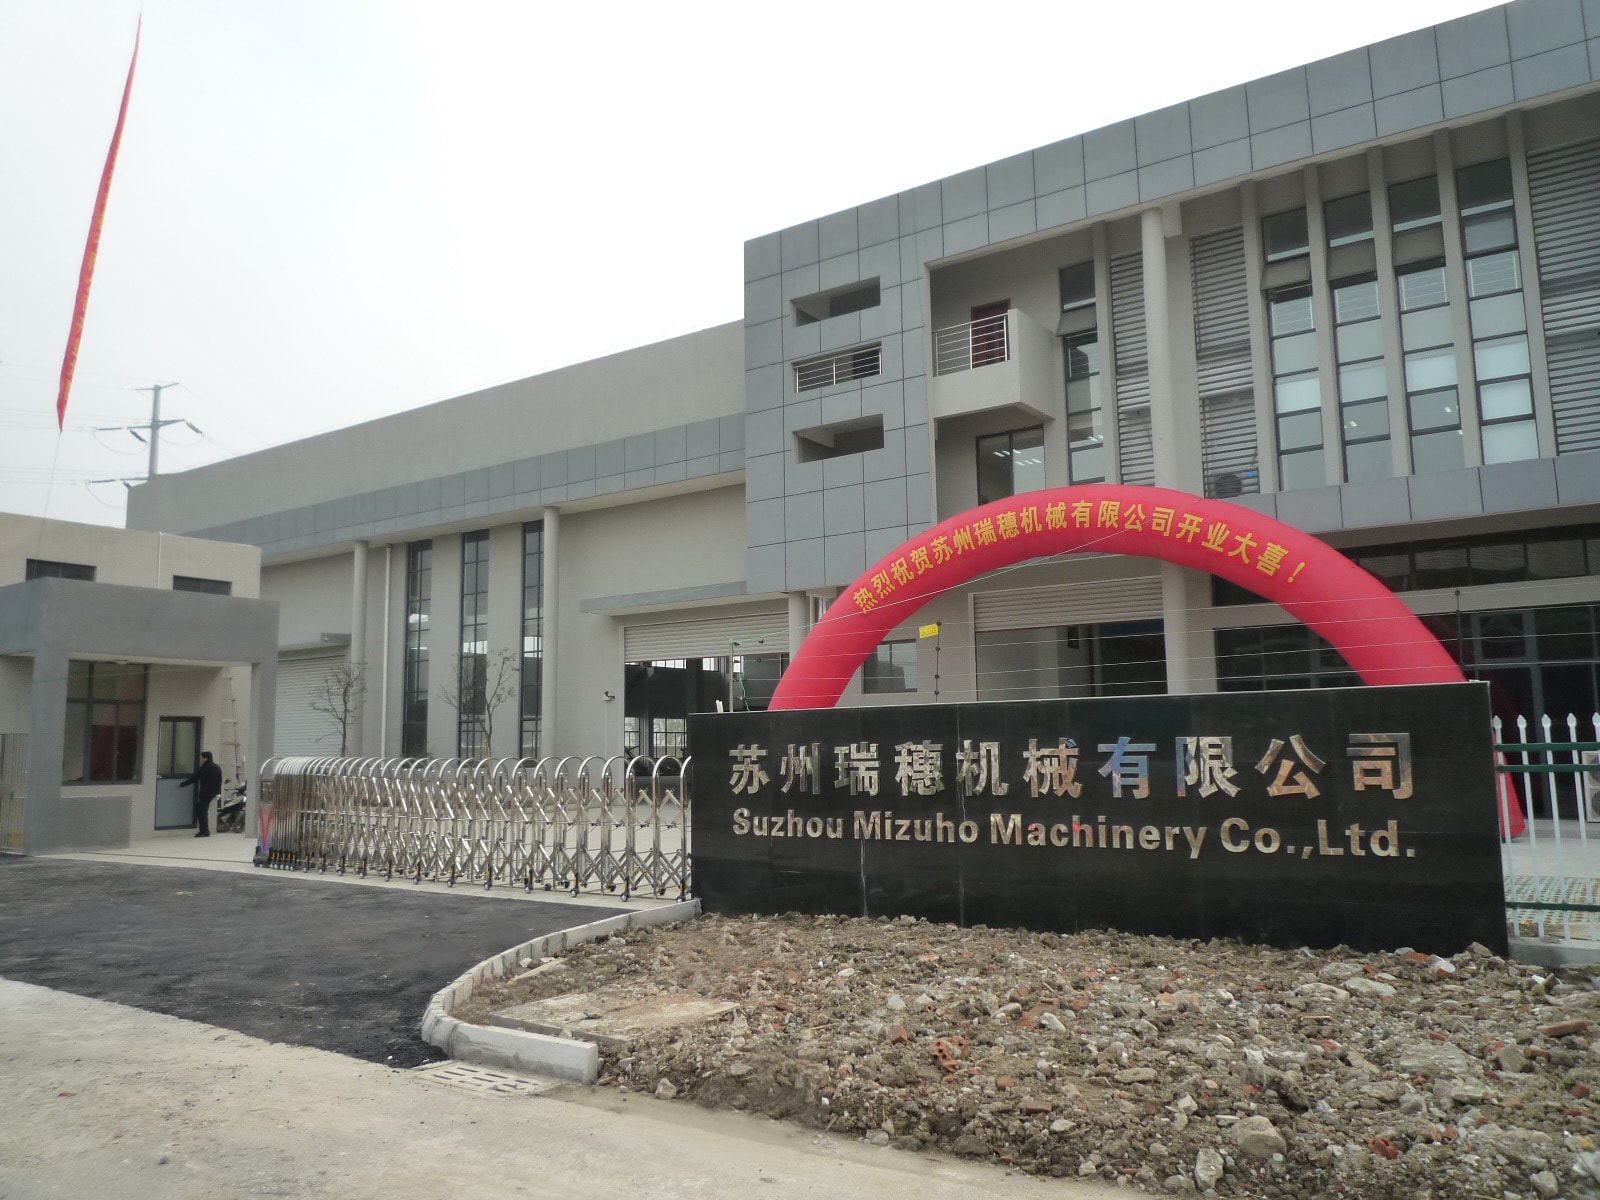 Suzhou Mizuho Machinery Co., Ltd.